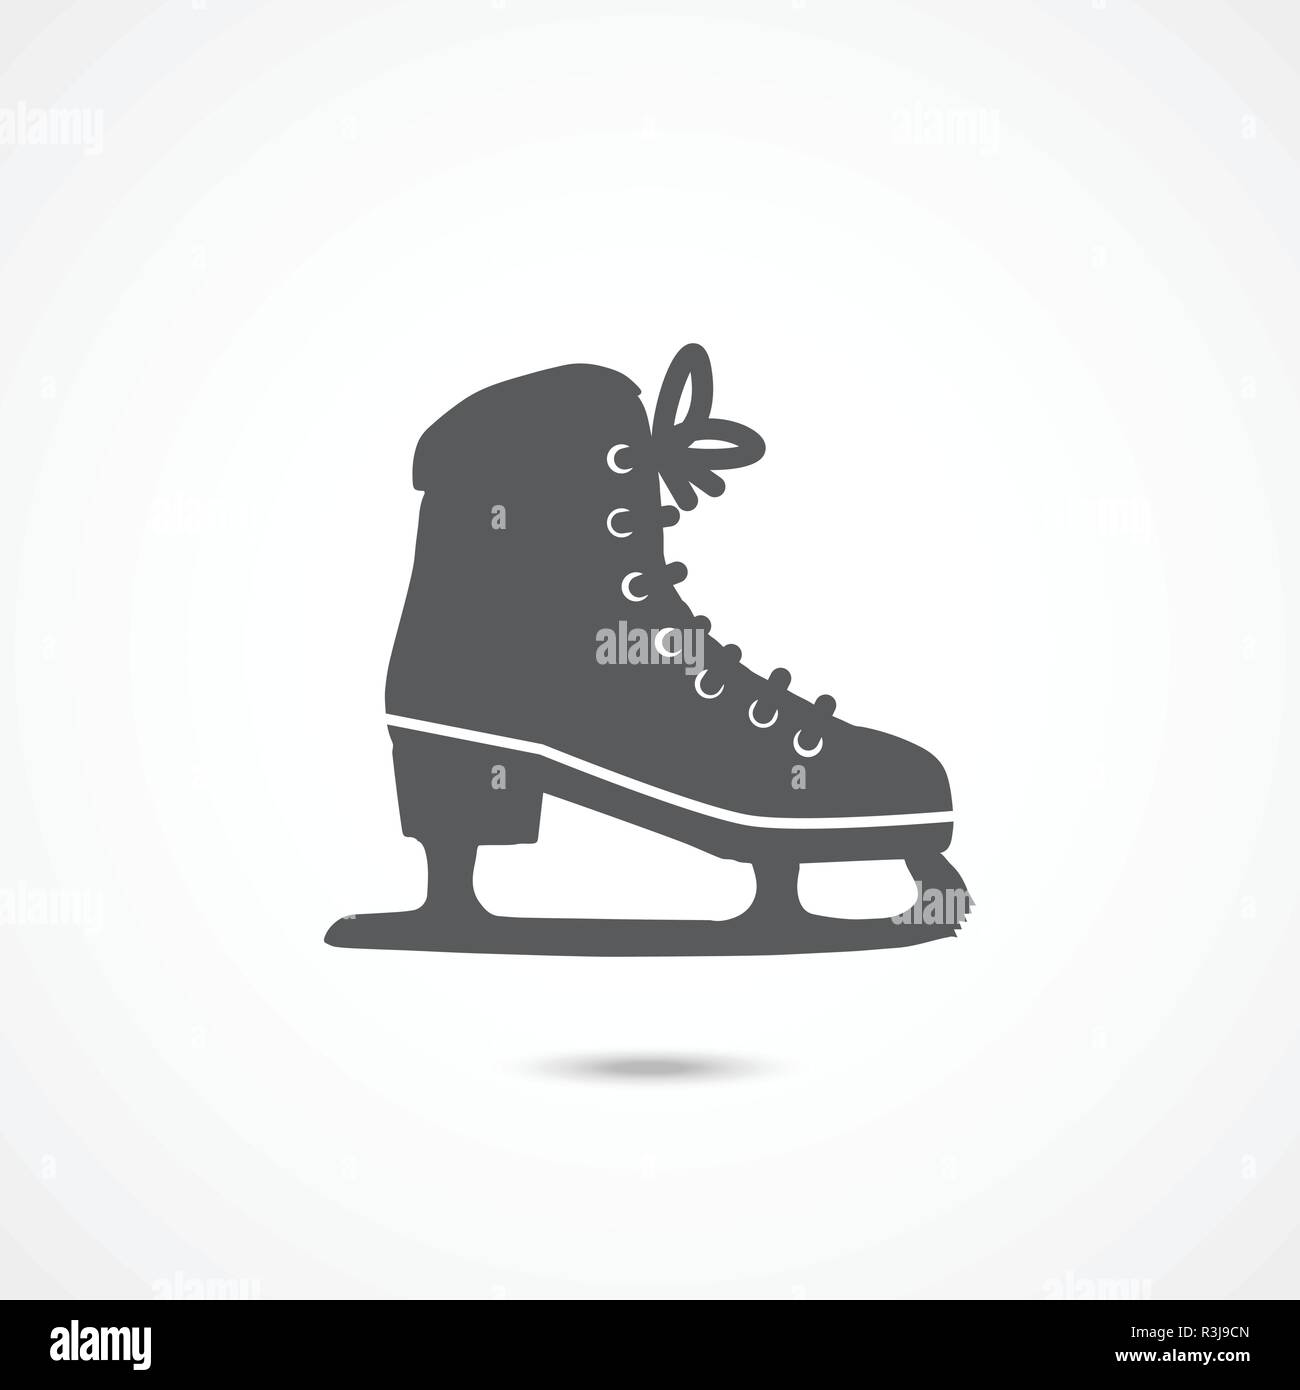 Ice skates icon Stock Vector